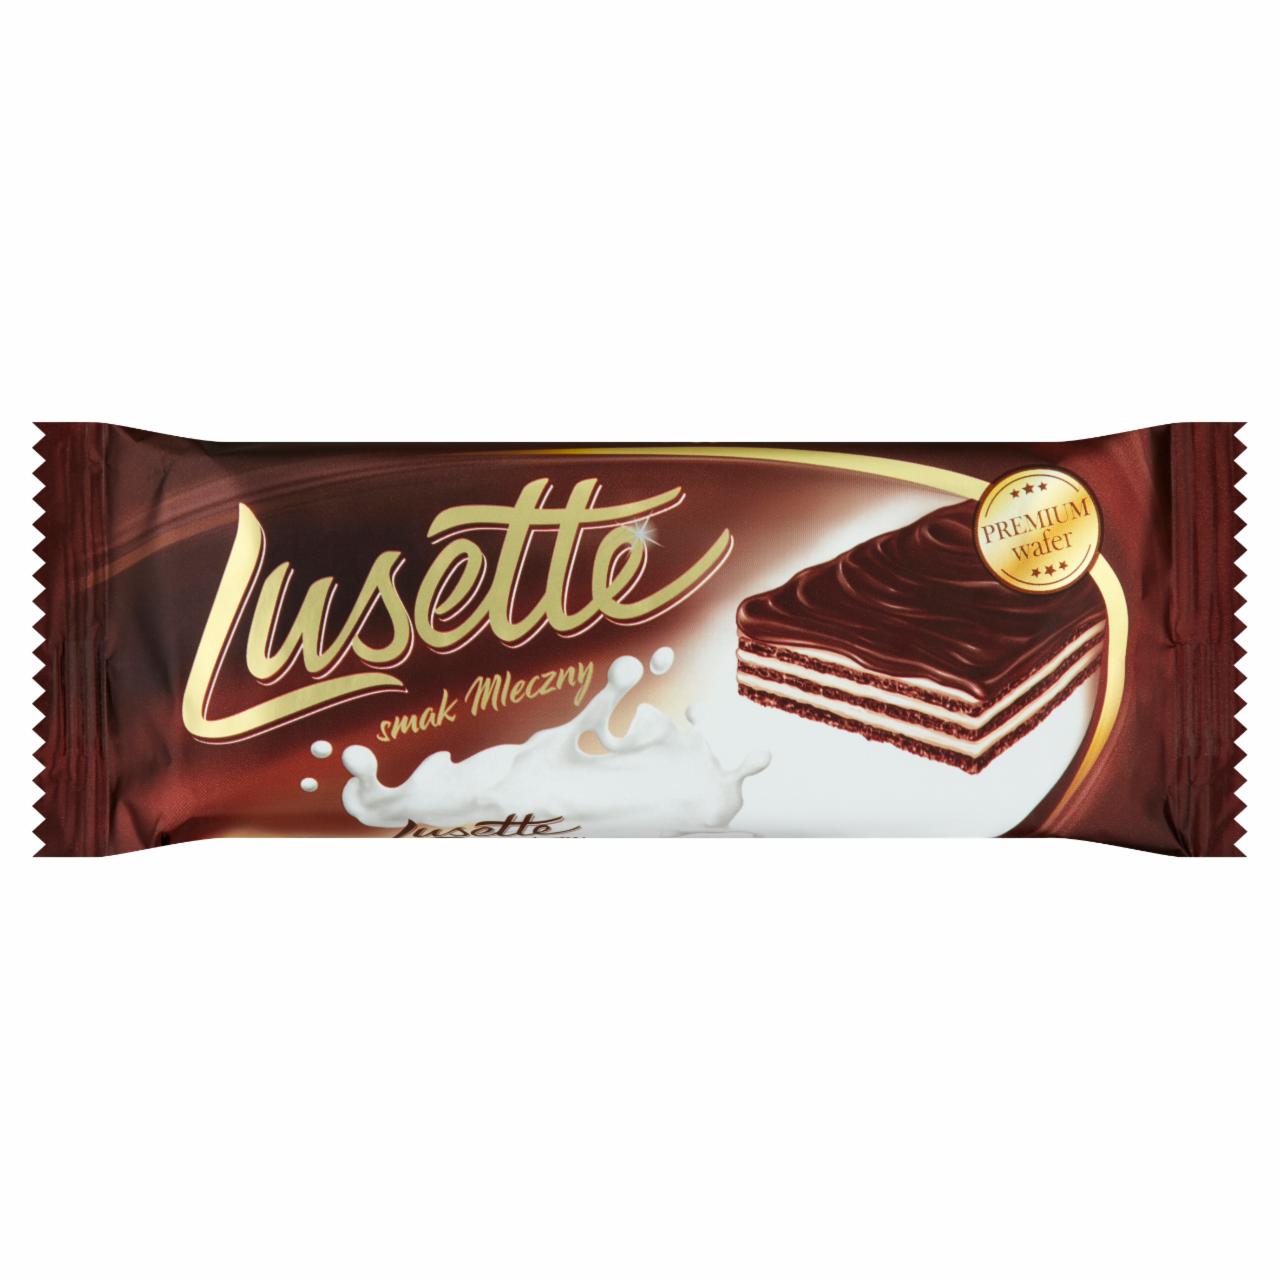 Fotografie - Dark Crispy Wafer with Milk Cream Filling in Cocoa Coating Lusette